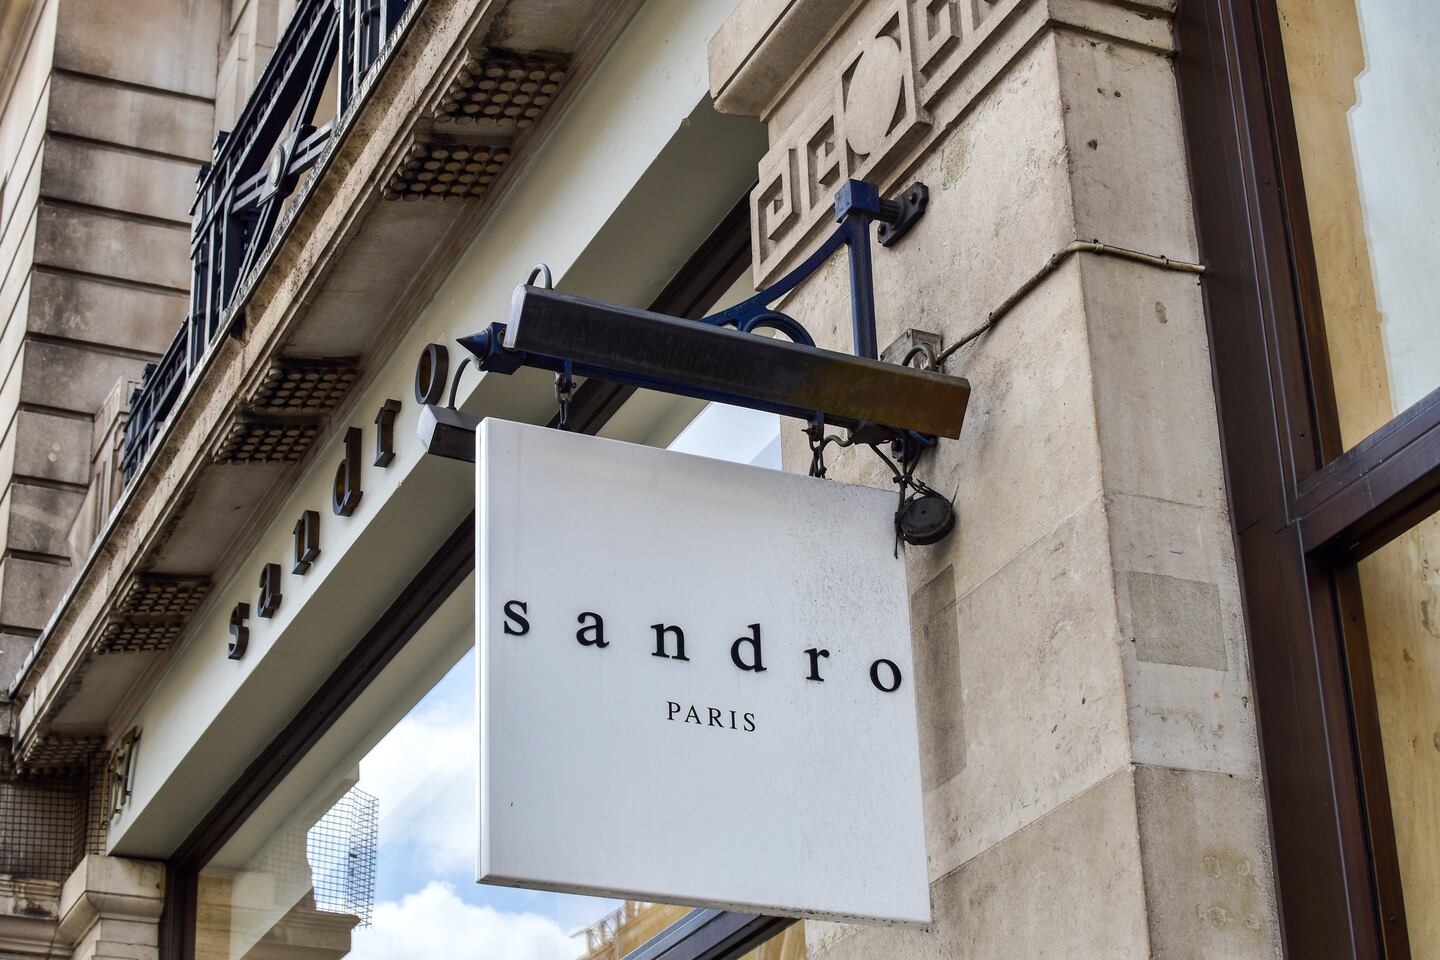 Facade of the Sandro store on Regent Street.